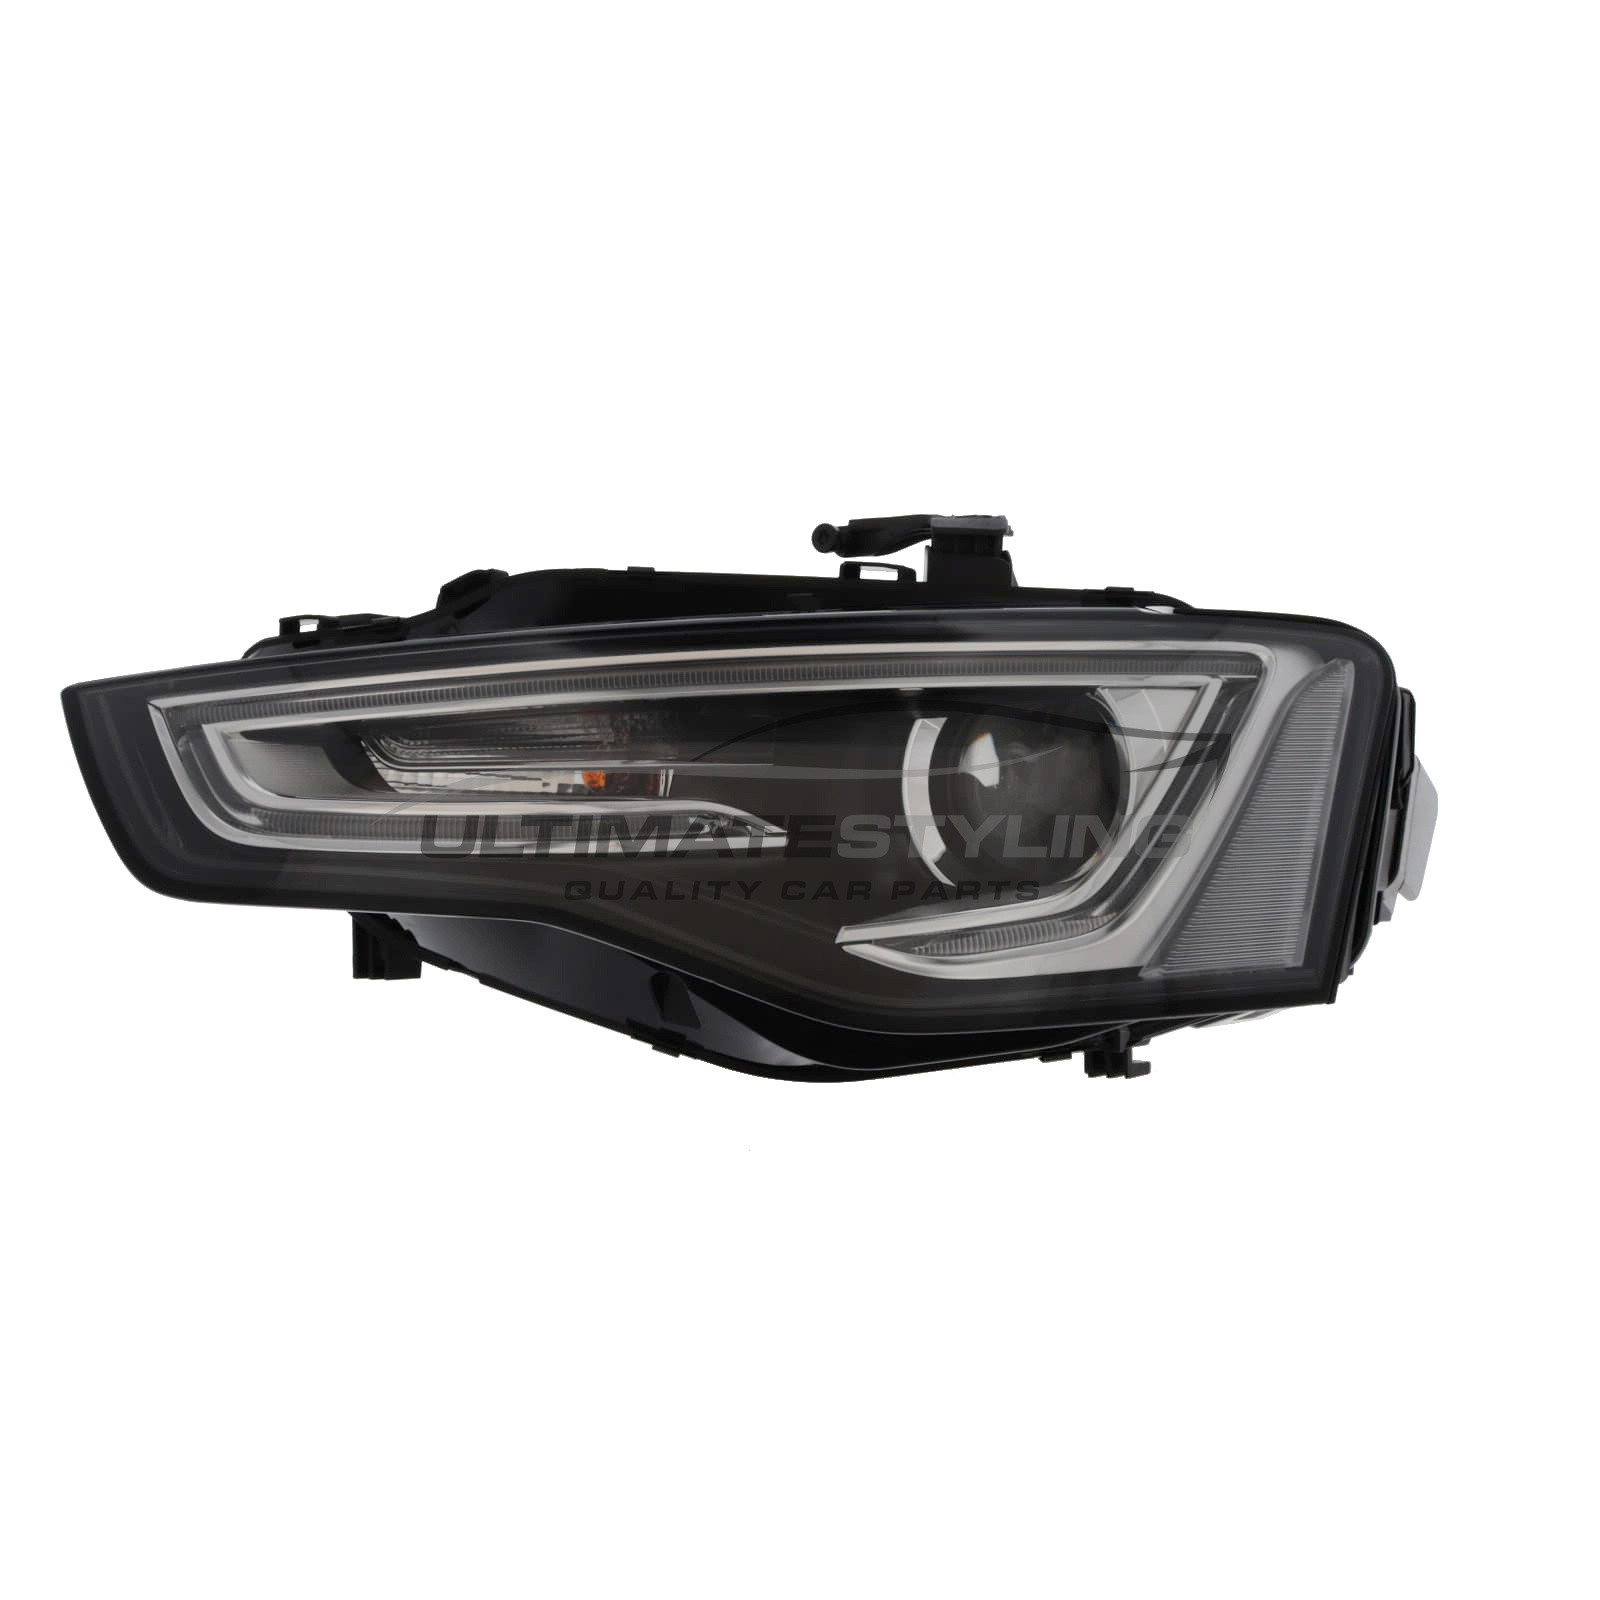 Audi A5 / RS5 / S5 Headlight / Headlamp - Passenger Side (LH) - Bi-Xenon With LED Daytime Running Lamp